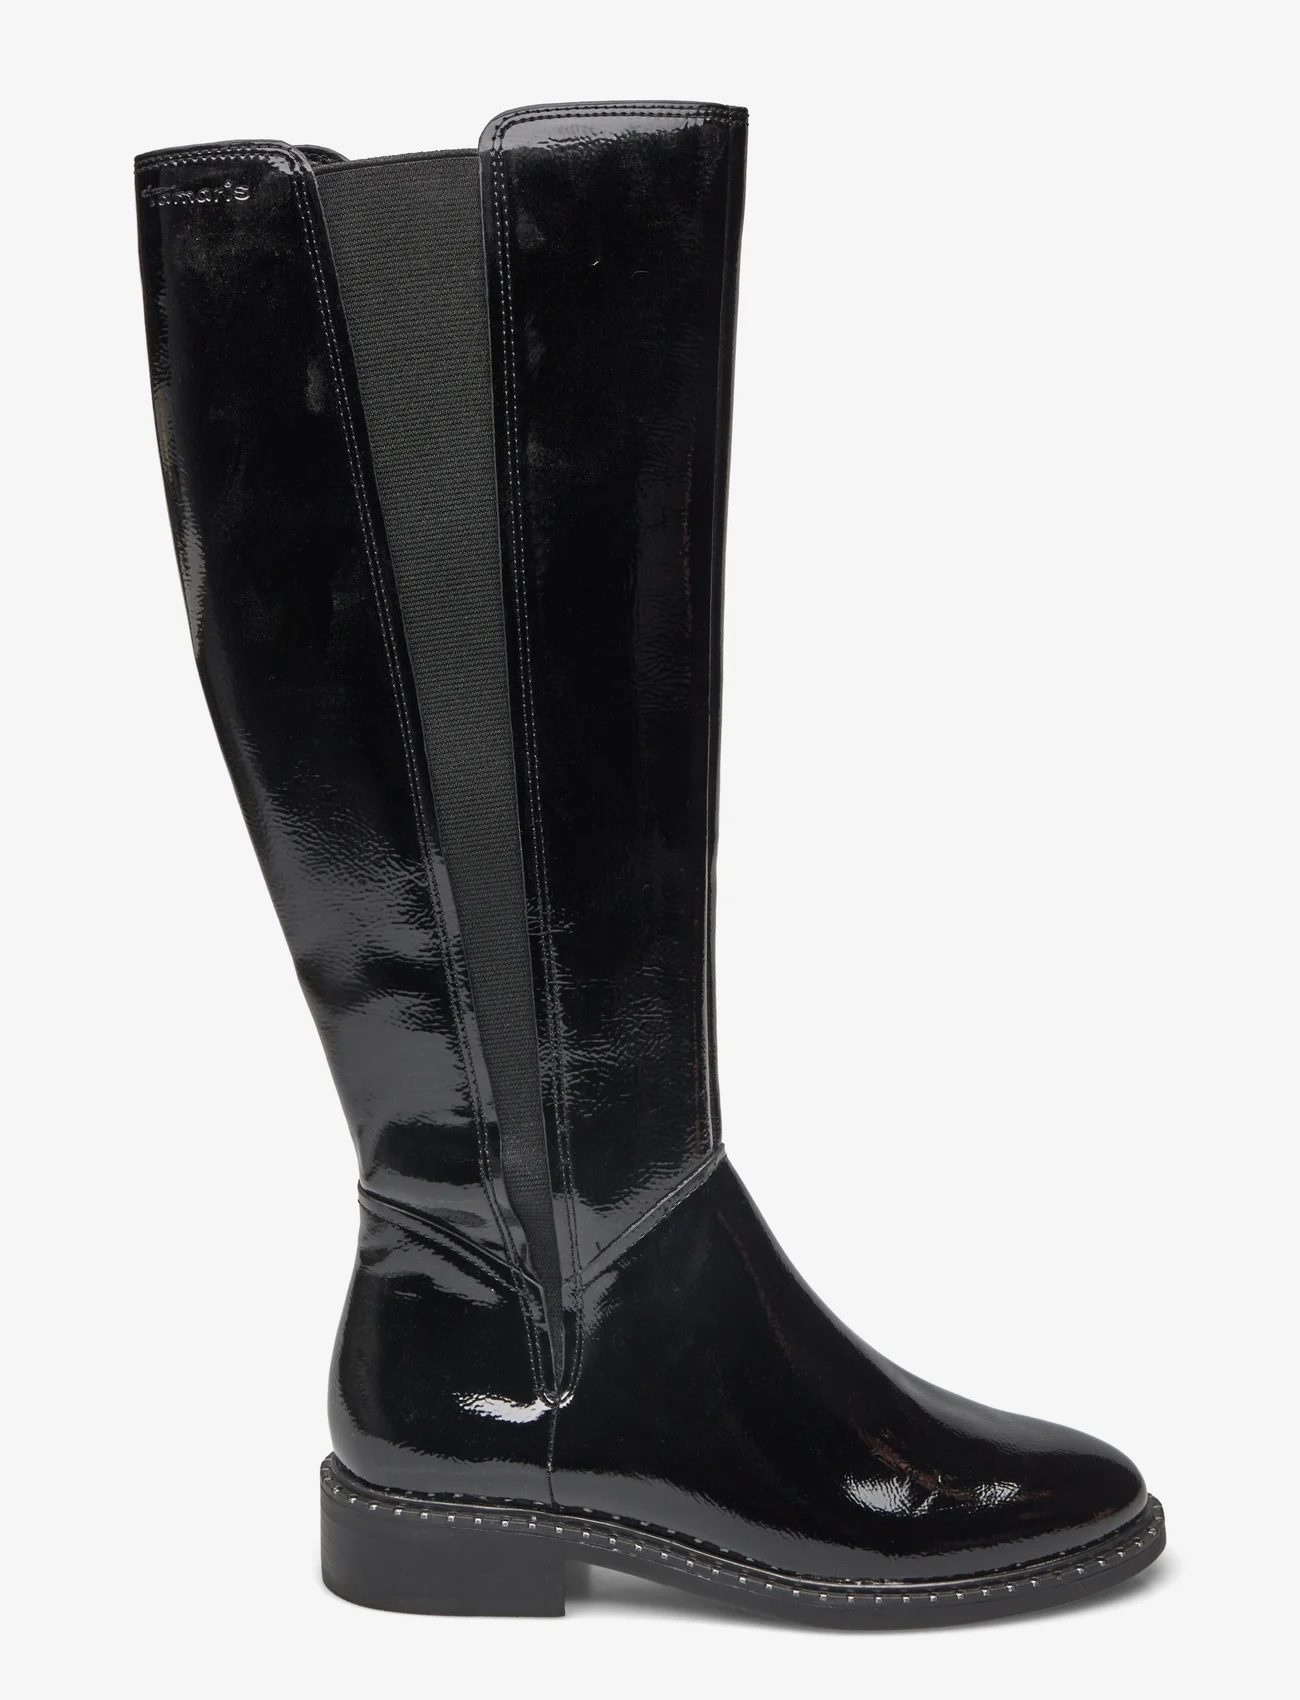 Tamaris - Women Boots - kniehohe stiefel - black patent - 1